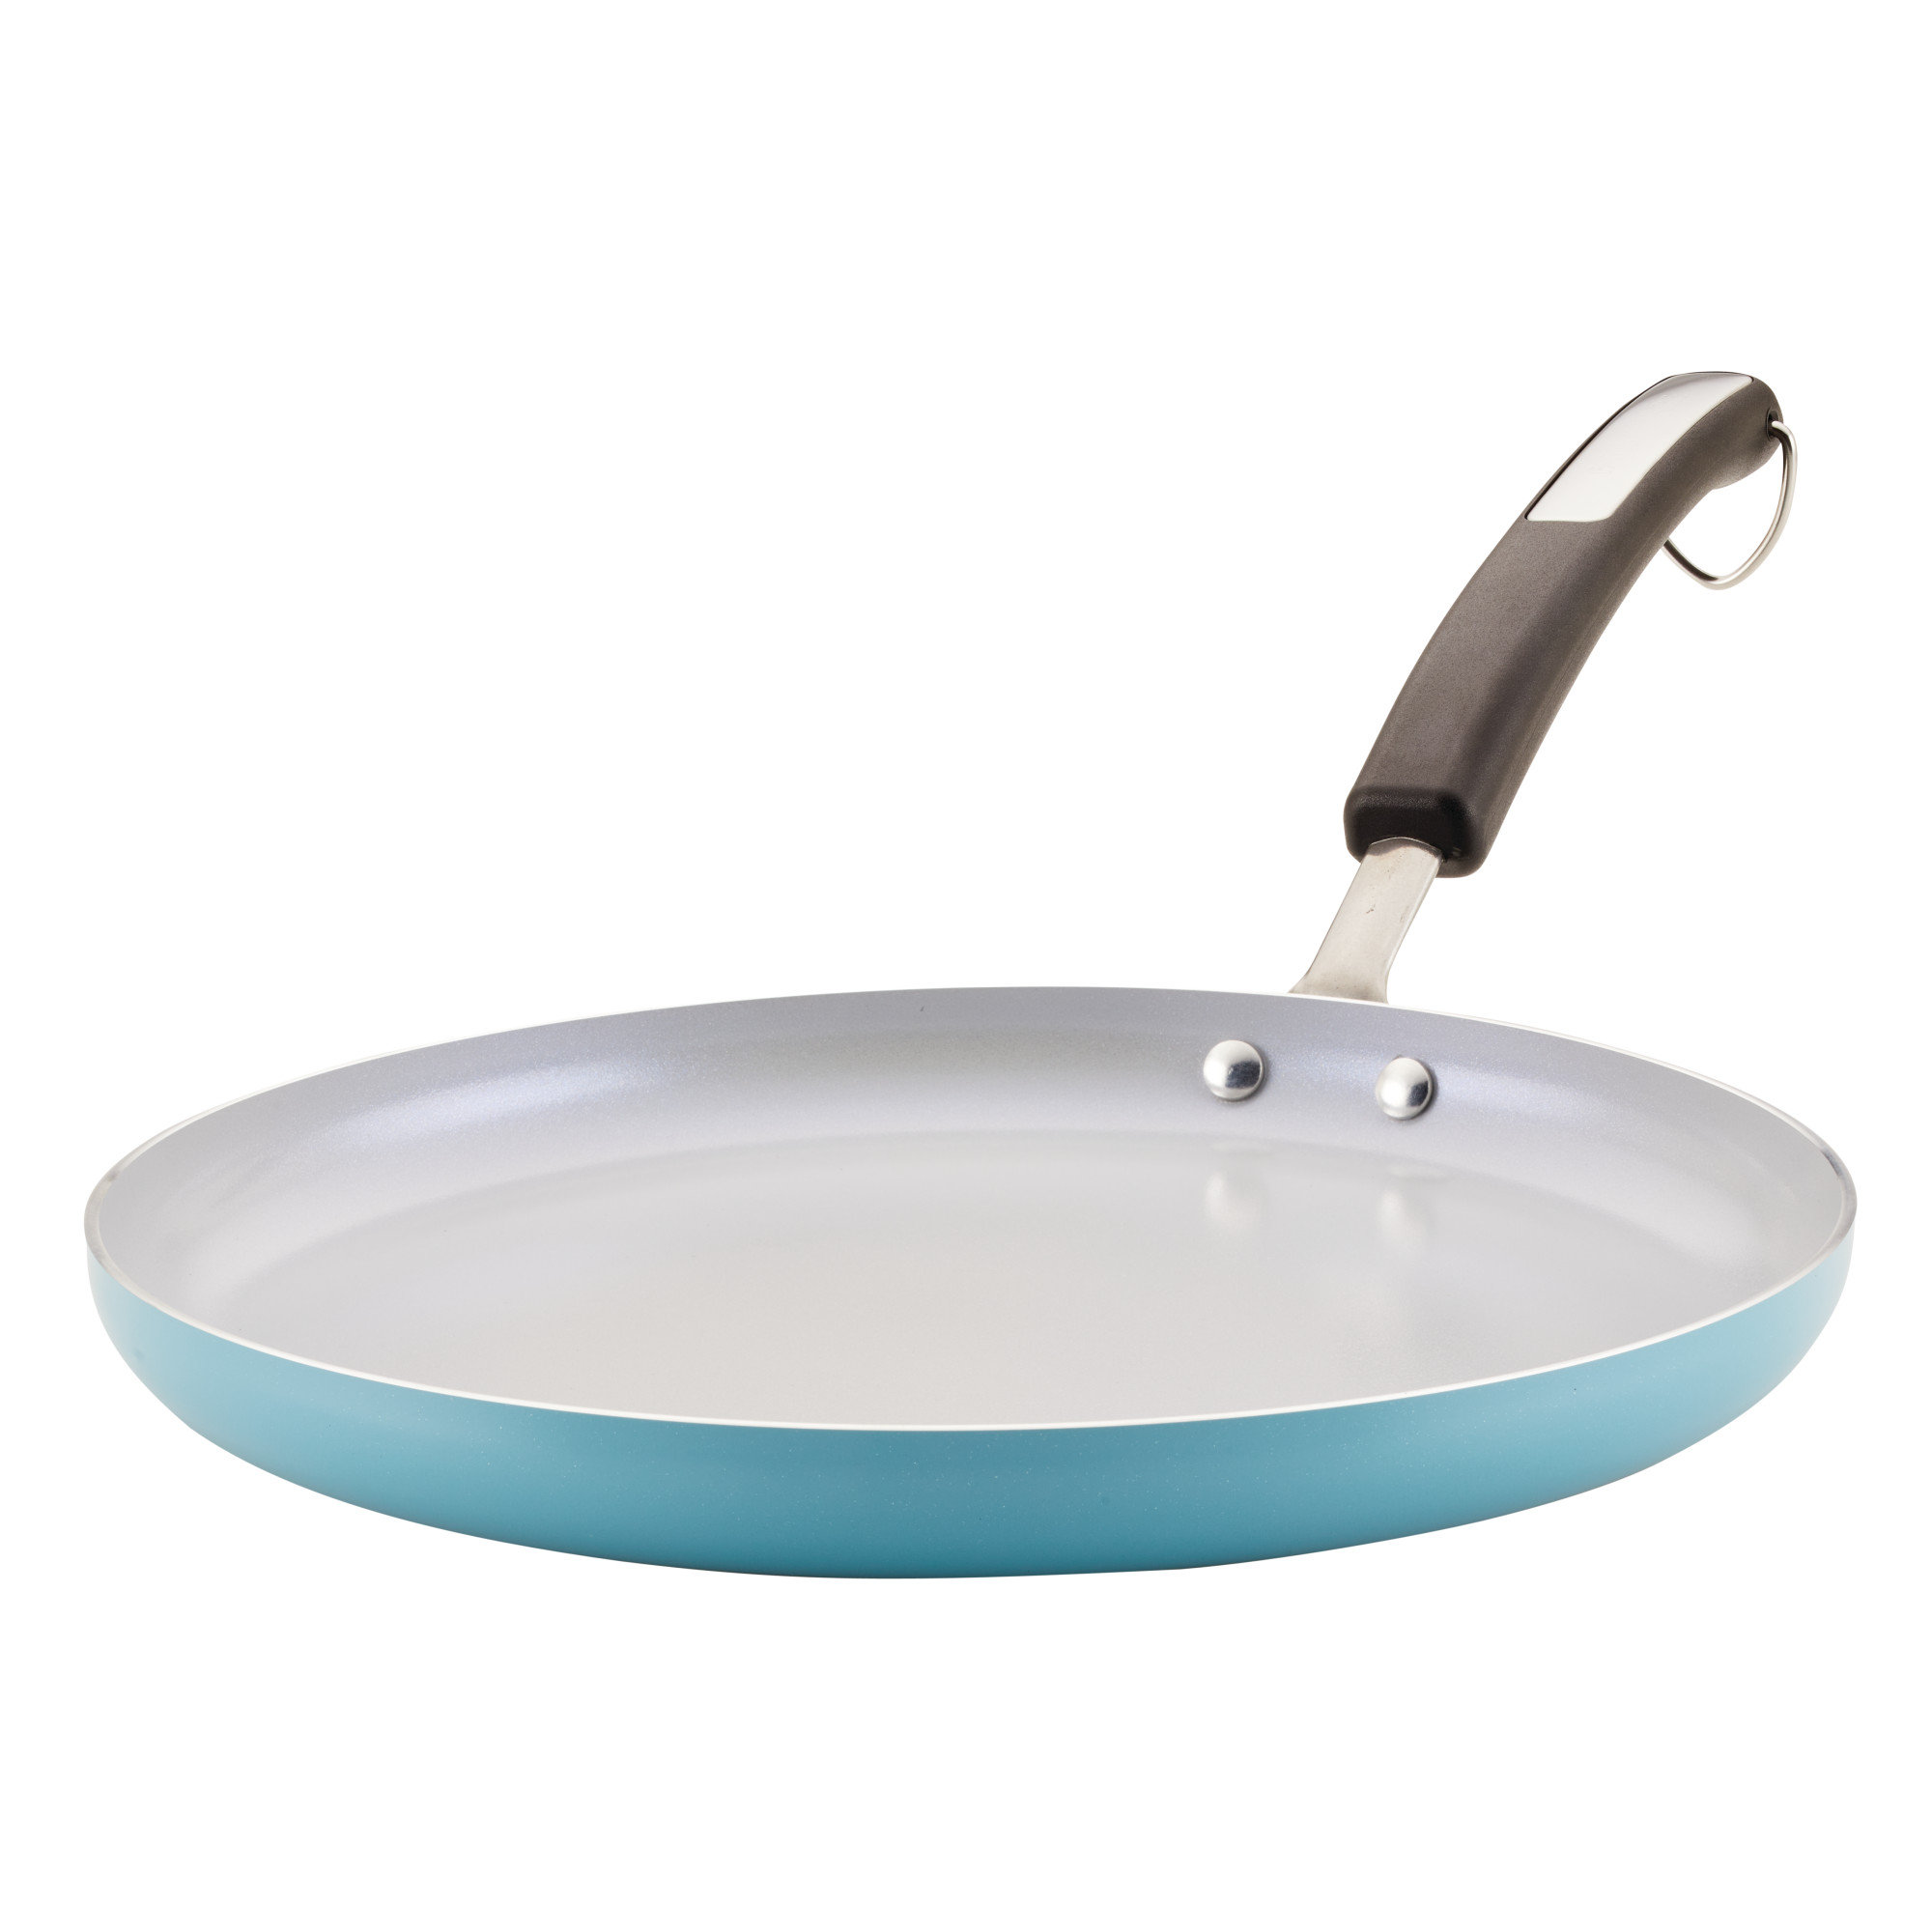 Farberware 11-inch Nonstick Square Deep Grill Pan